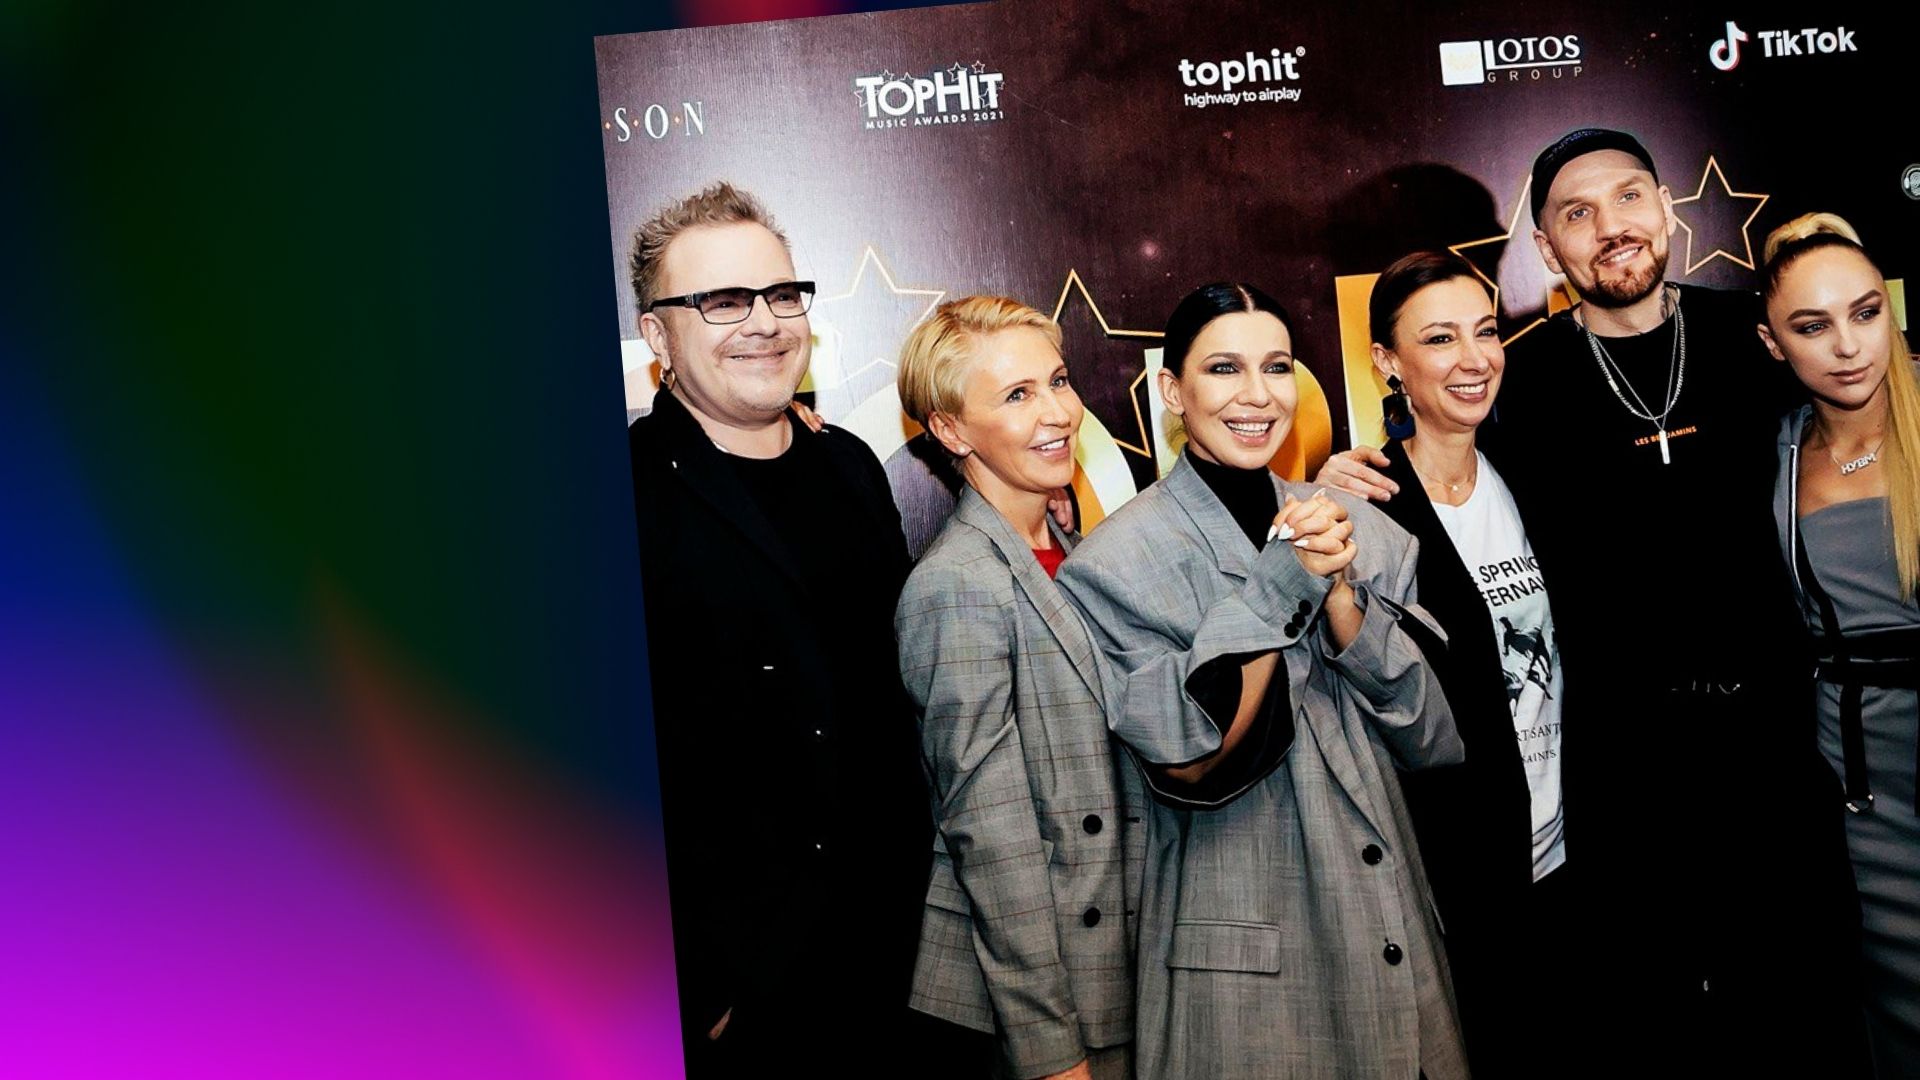 Vladimir Presnyakov, Alyona Mikhailova, Yolka, Liana Meladze, Zvonky, Mary Krimbrery, Top Hit Music Awards Winners